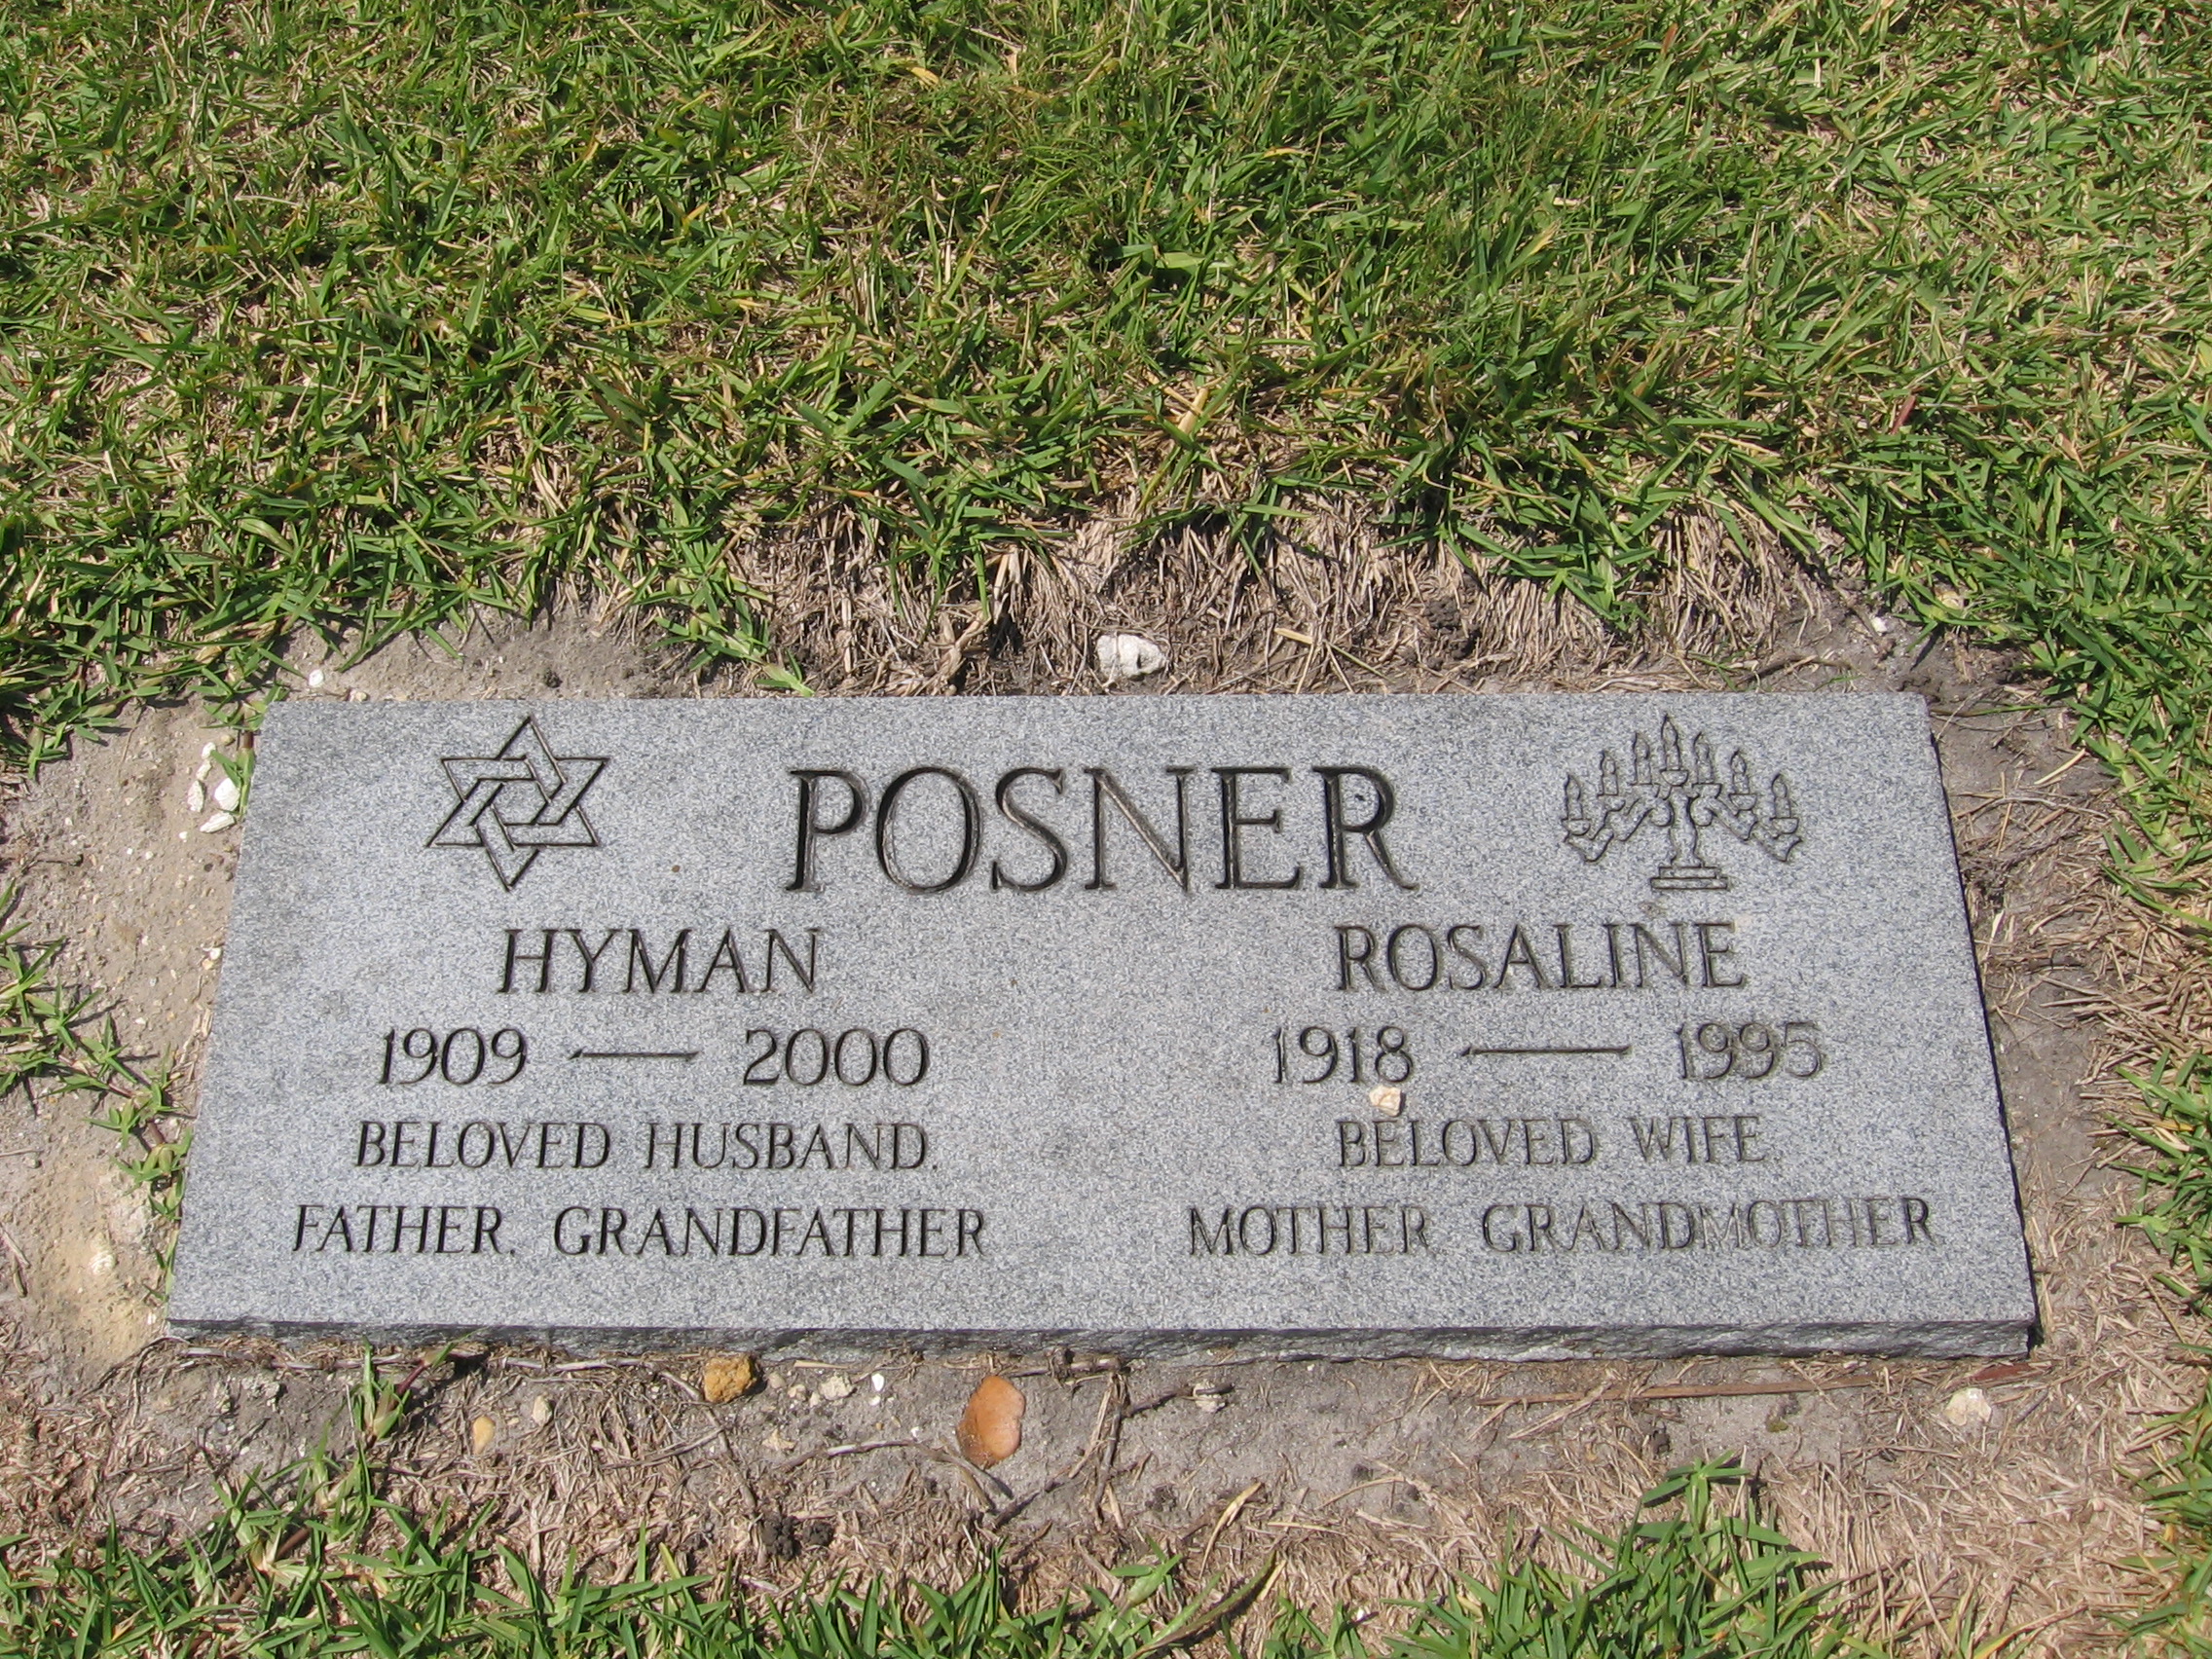 Hyman Posner